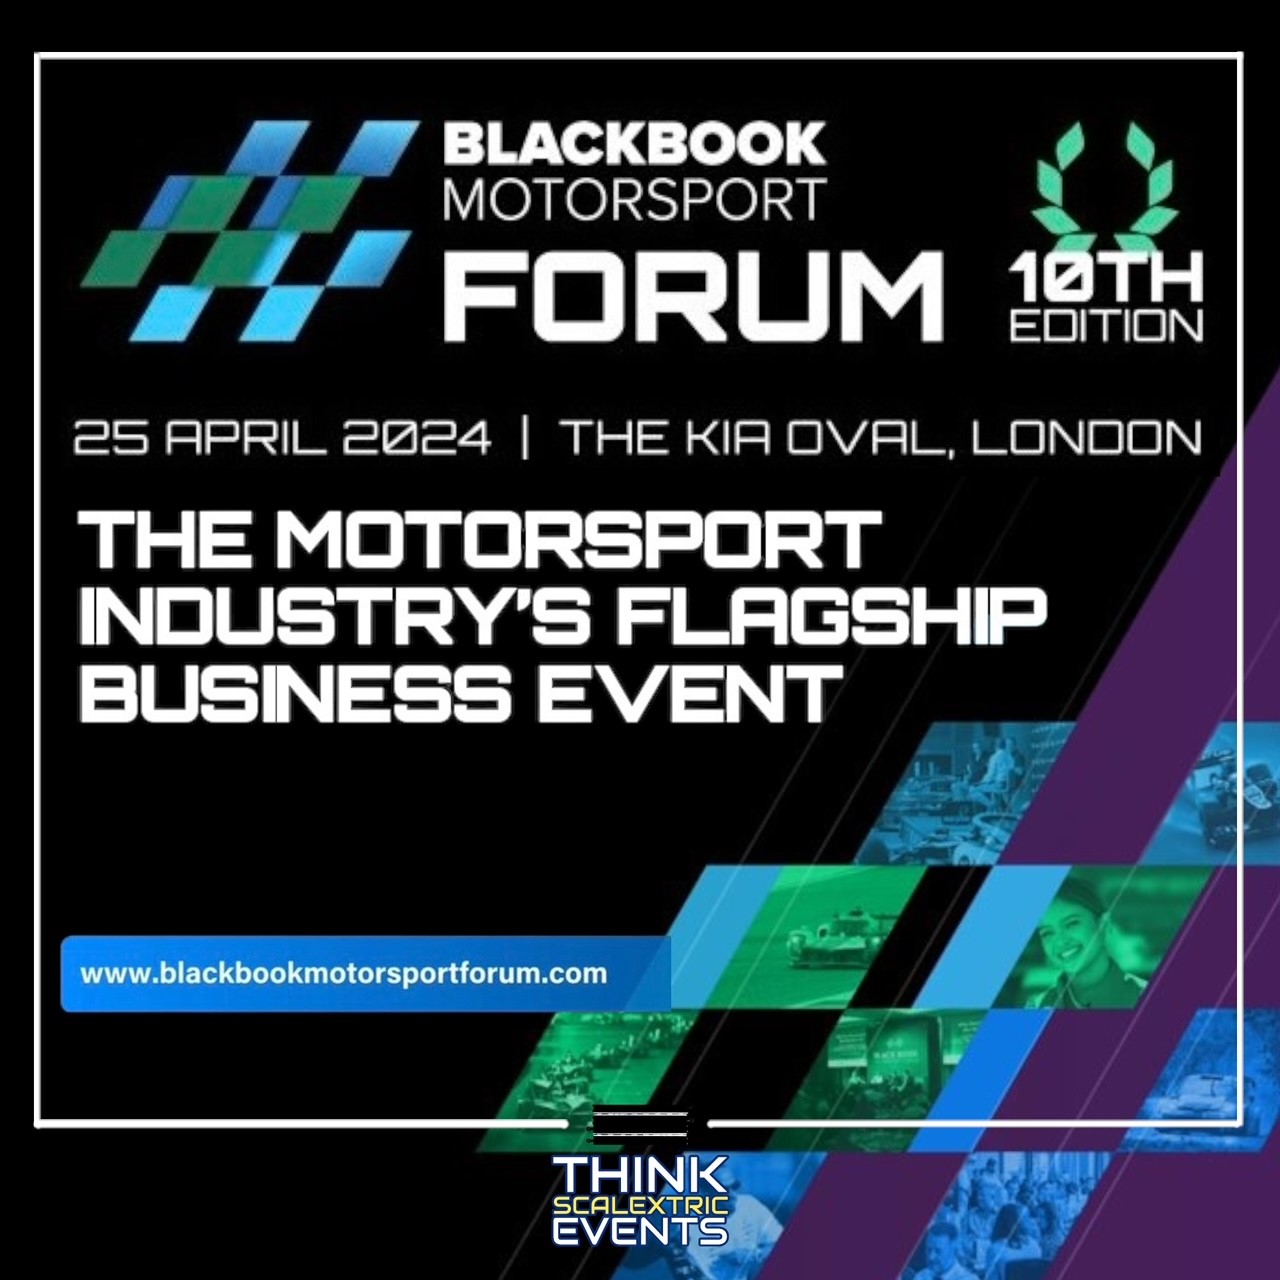 BlackBook Motorsport Forum Kia Oval London April 2024